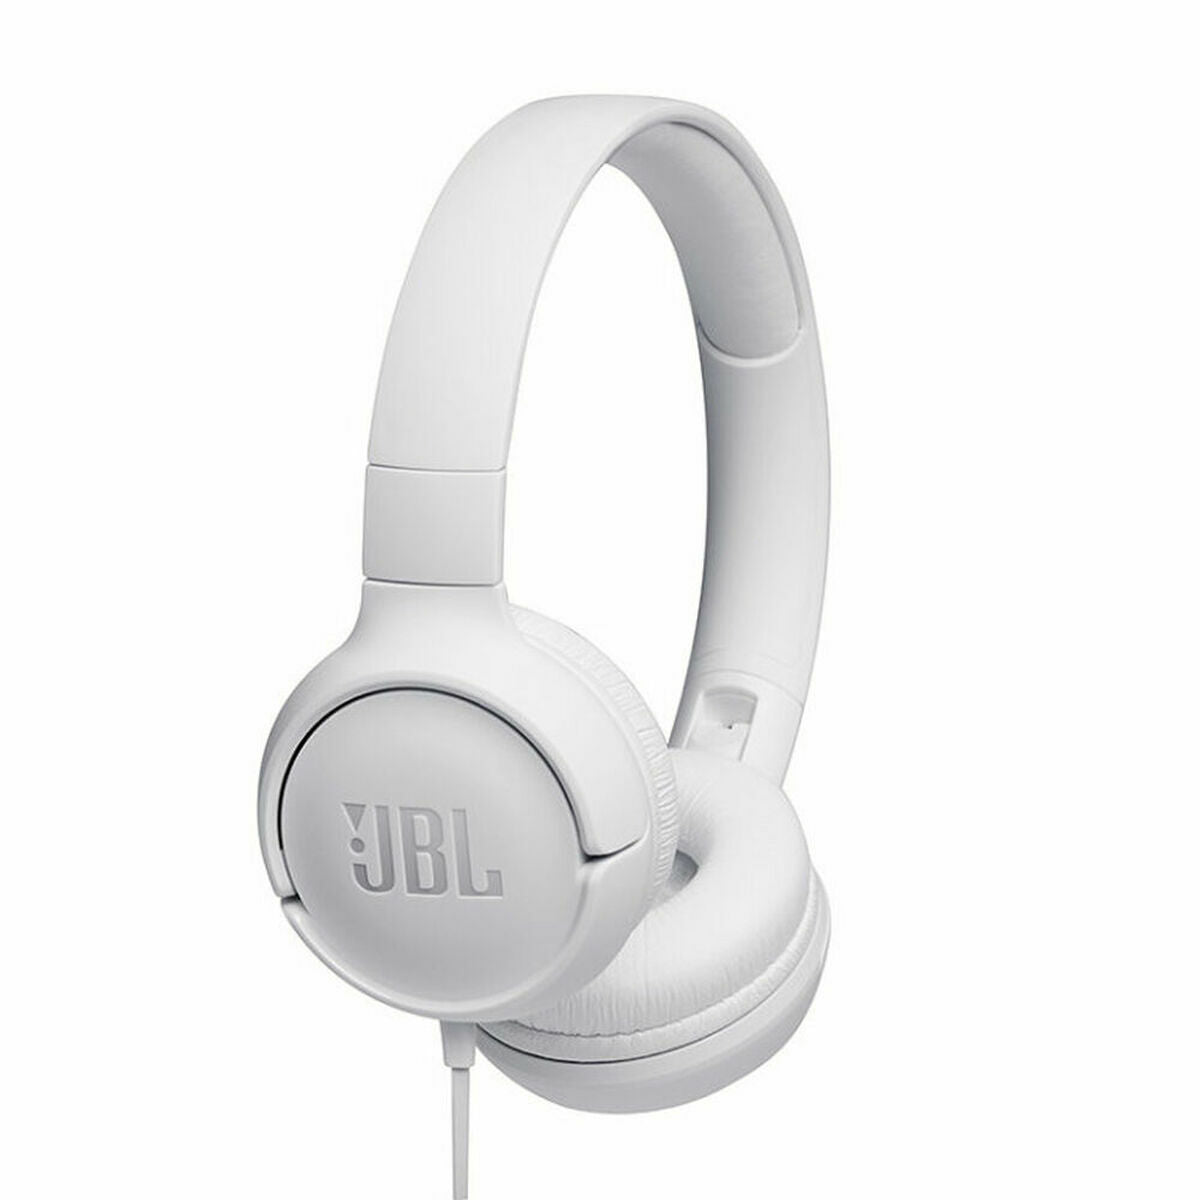 Kaufe Kopfhörer mit Mikrofon JBL TUNE 500 Weiß bei AWK Flagship um € 59.00